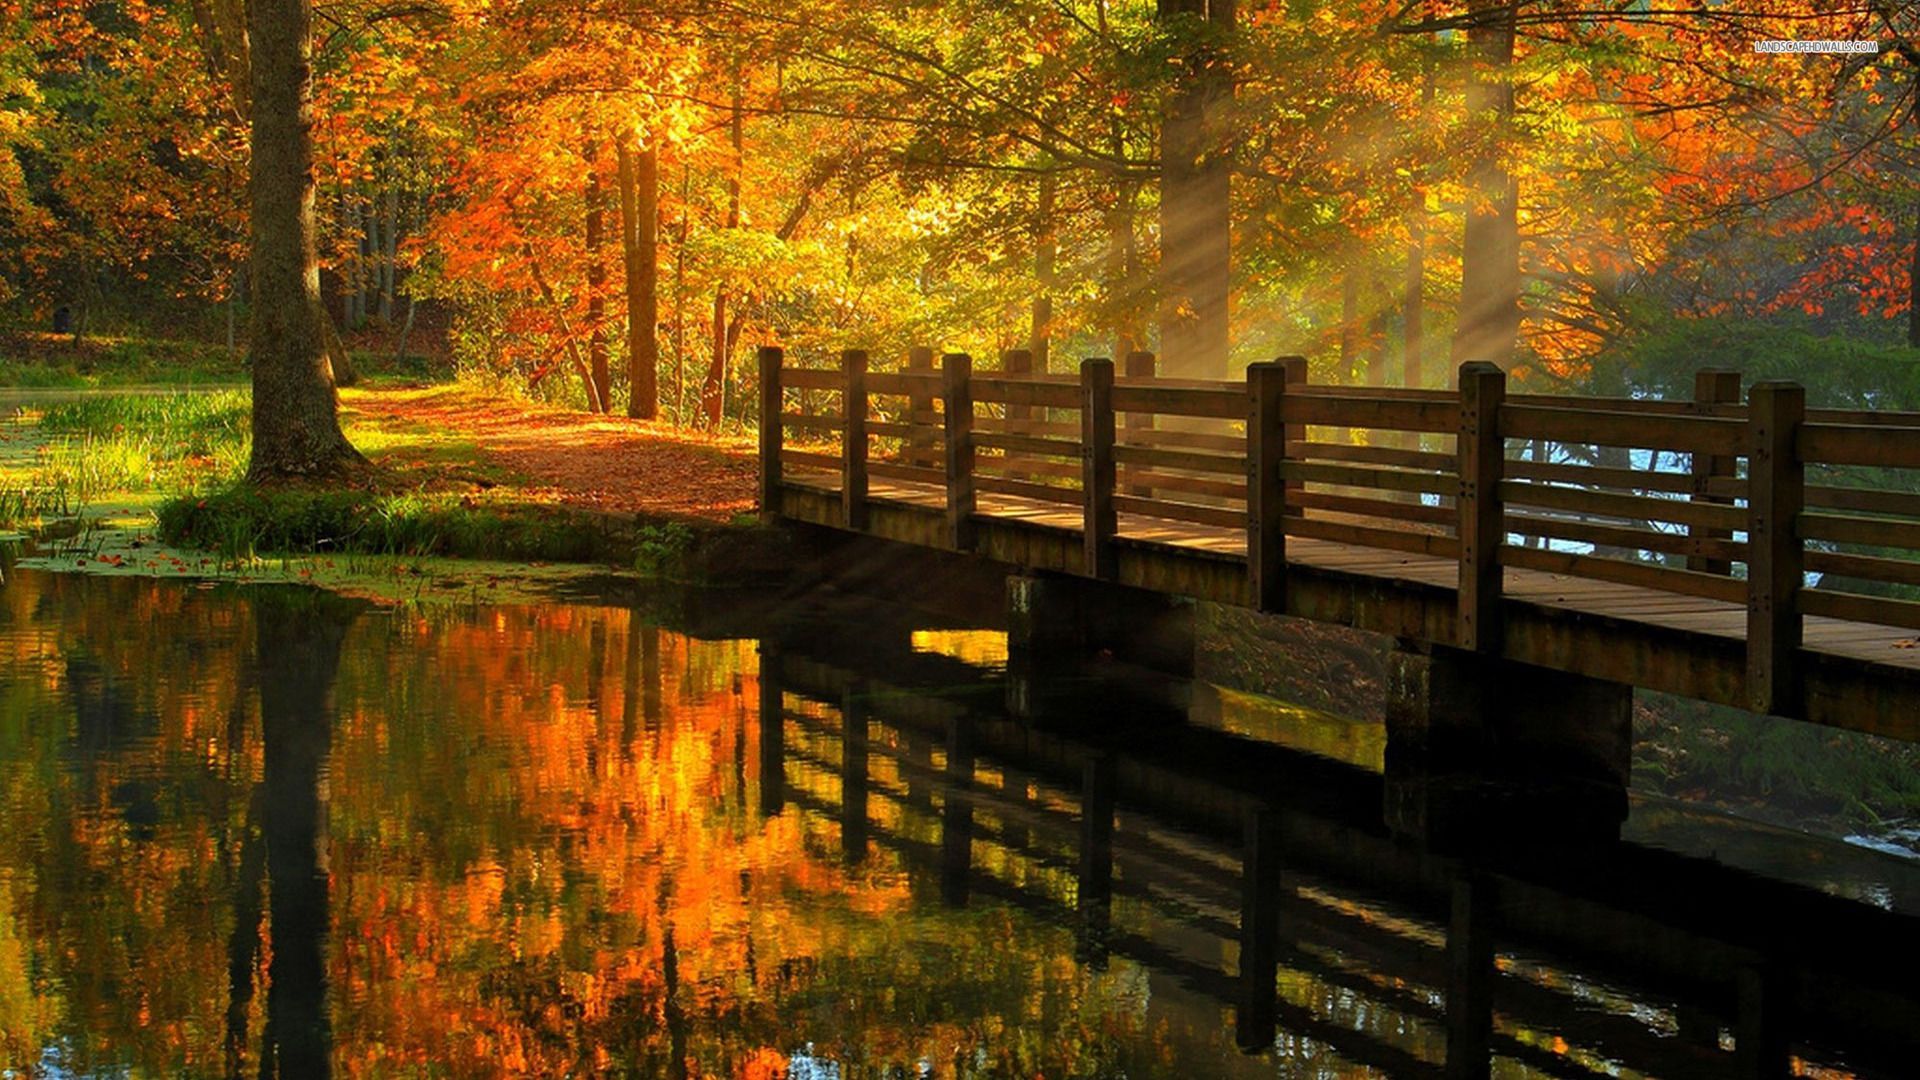 Wooden bridge in the autumn forest wallpaper. Forest wallpaper, Autumn forest, Picture of bridges